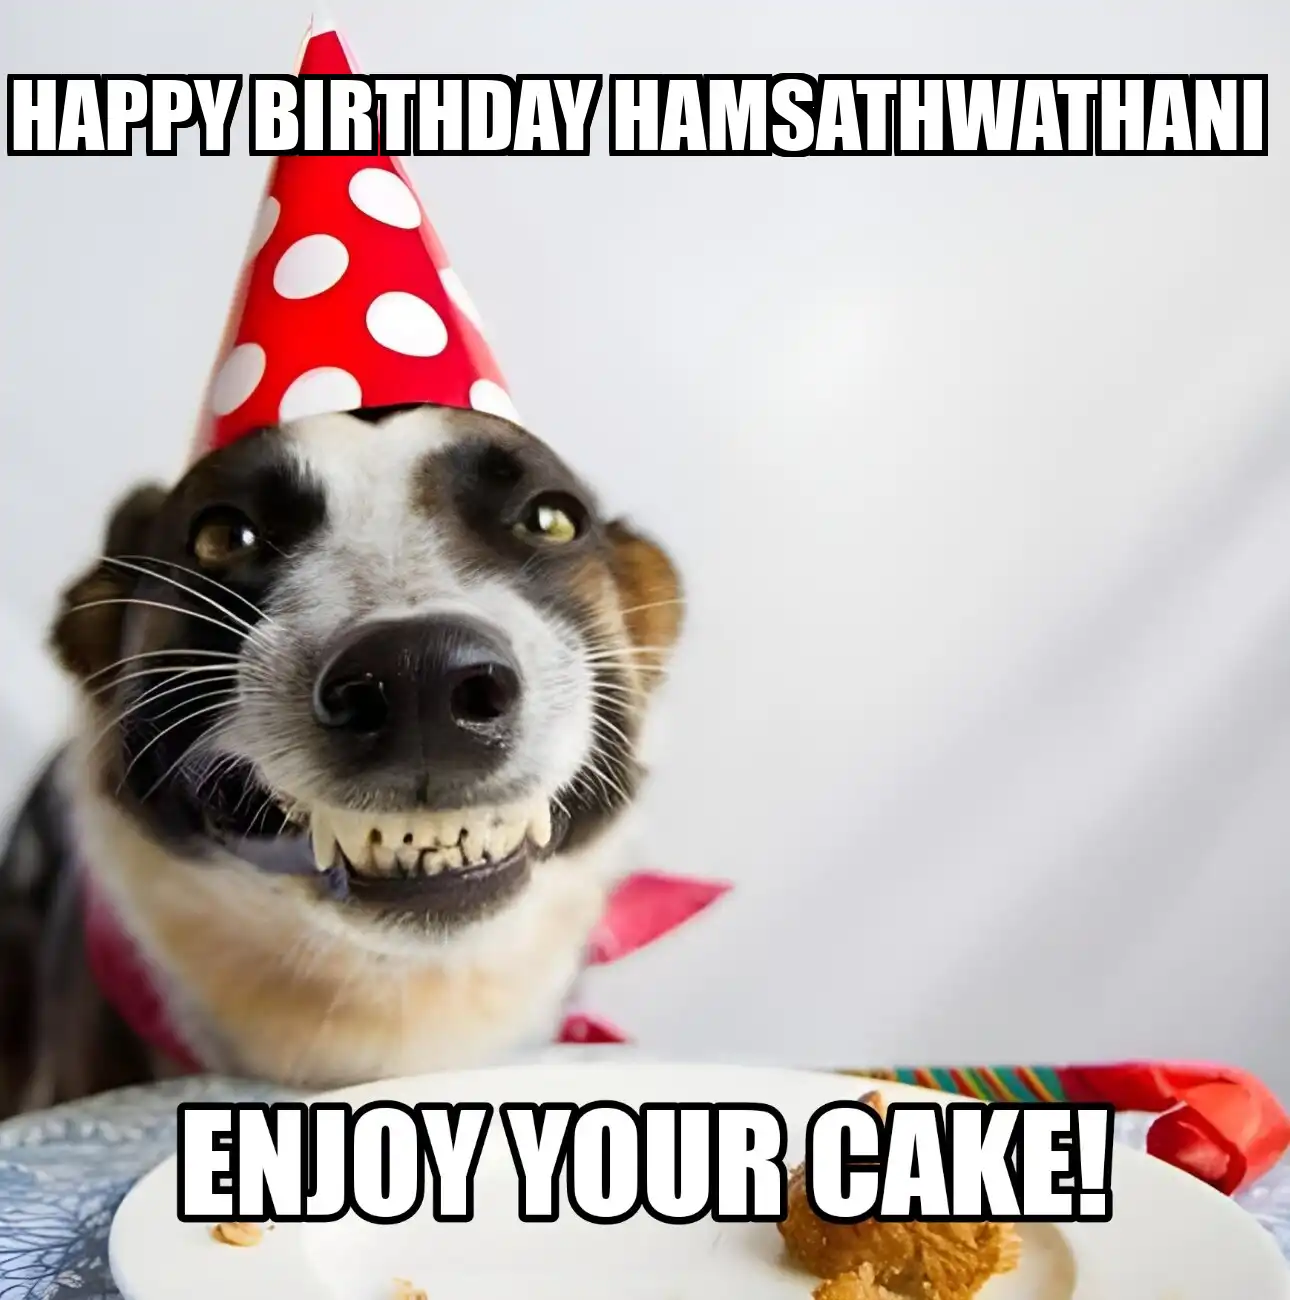 Happy Birthday Hamsathwathani Enjoy Your Cake Dog Meme